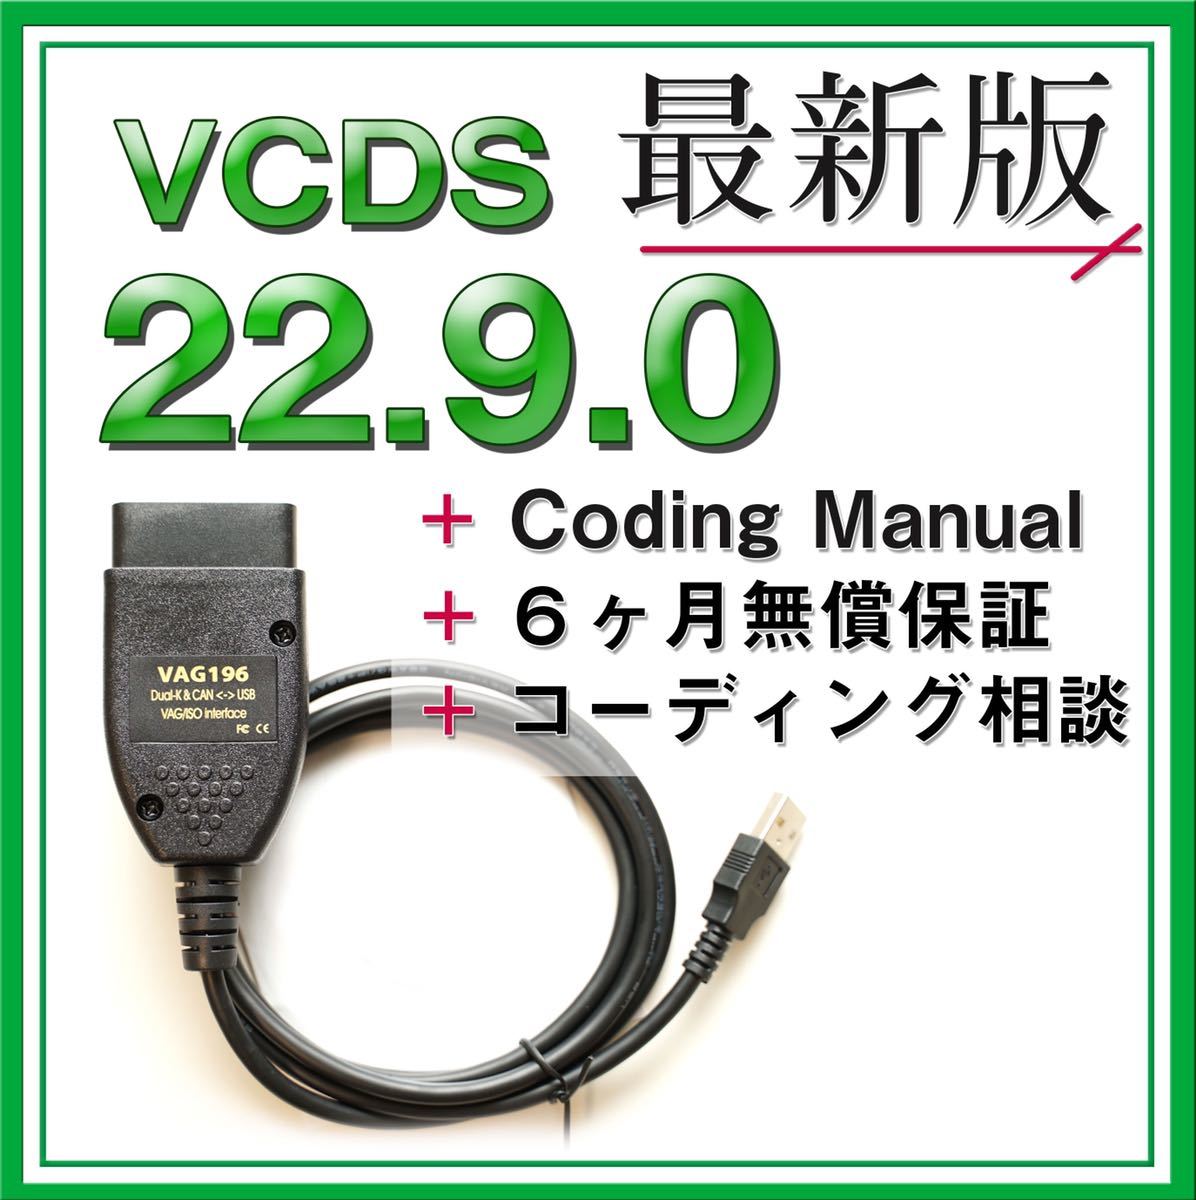 margen kradse Formindske 最高品質の Ross-Tech HEX CAN USB VCDS 正規品 asakusa.sub.jp